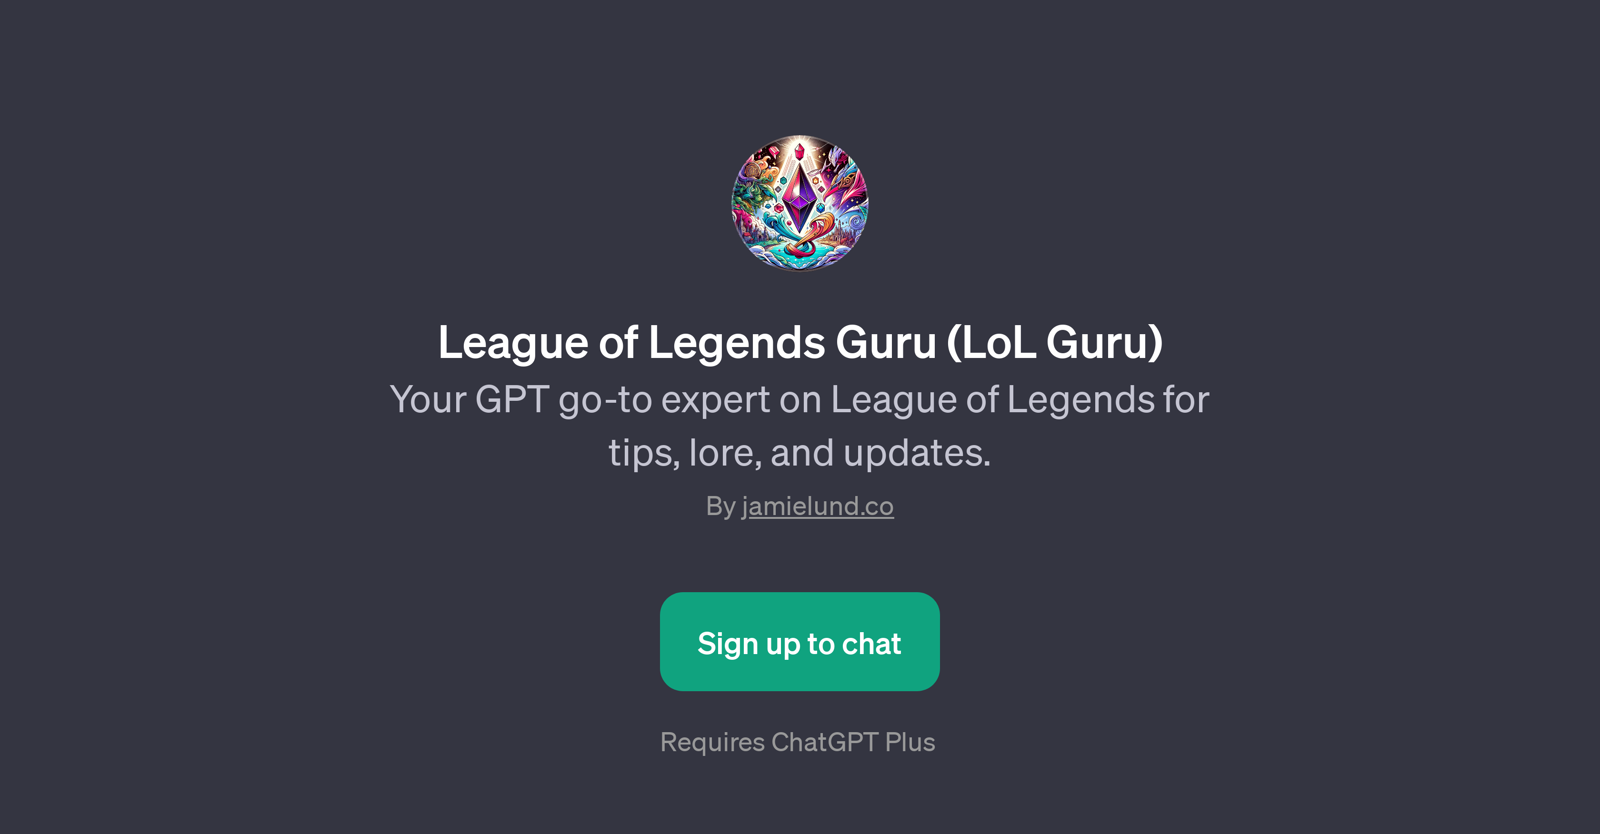 League of Legends Guru (LoL Guru) website